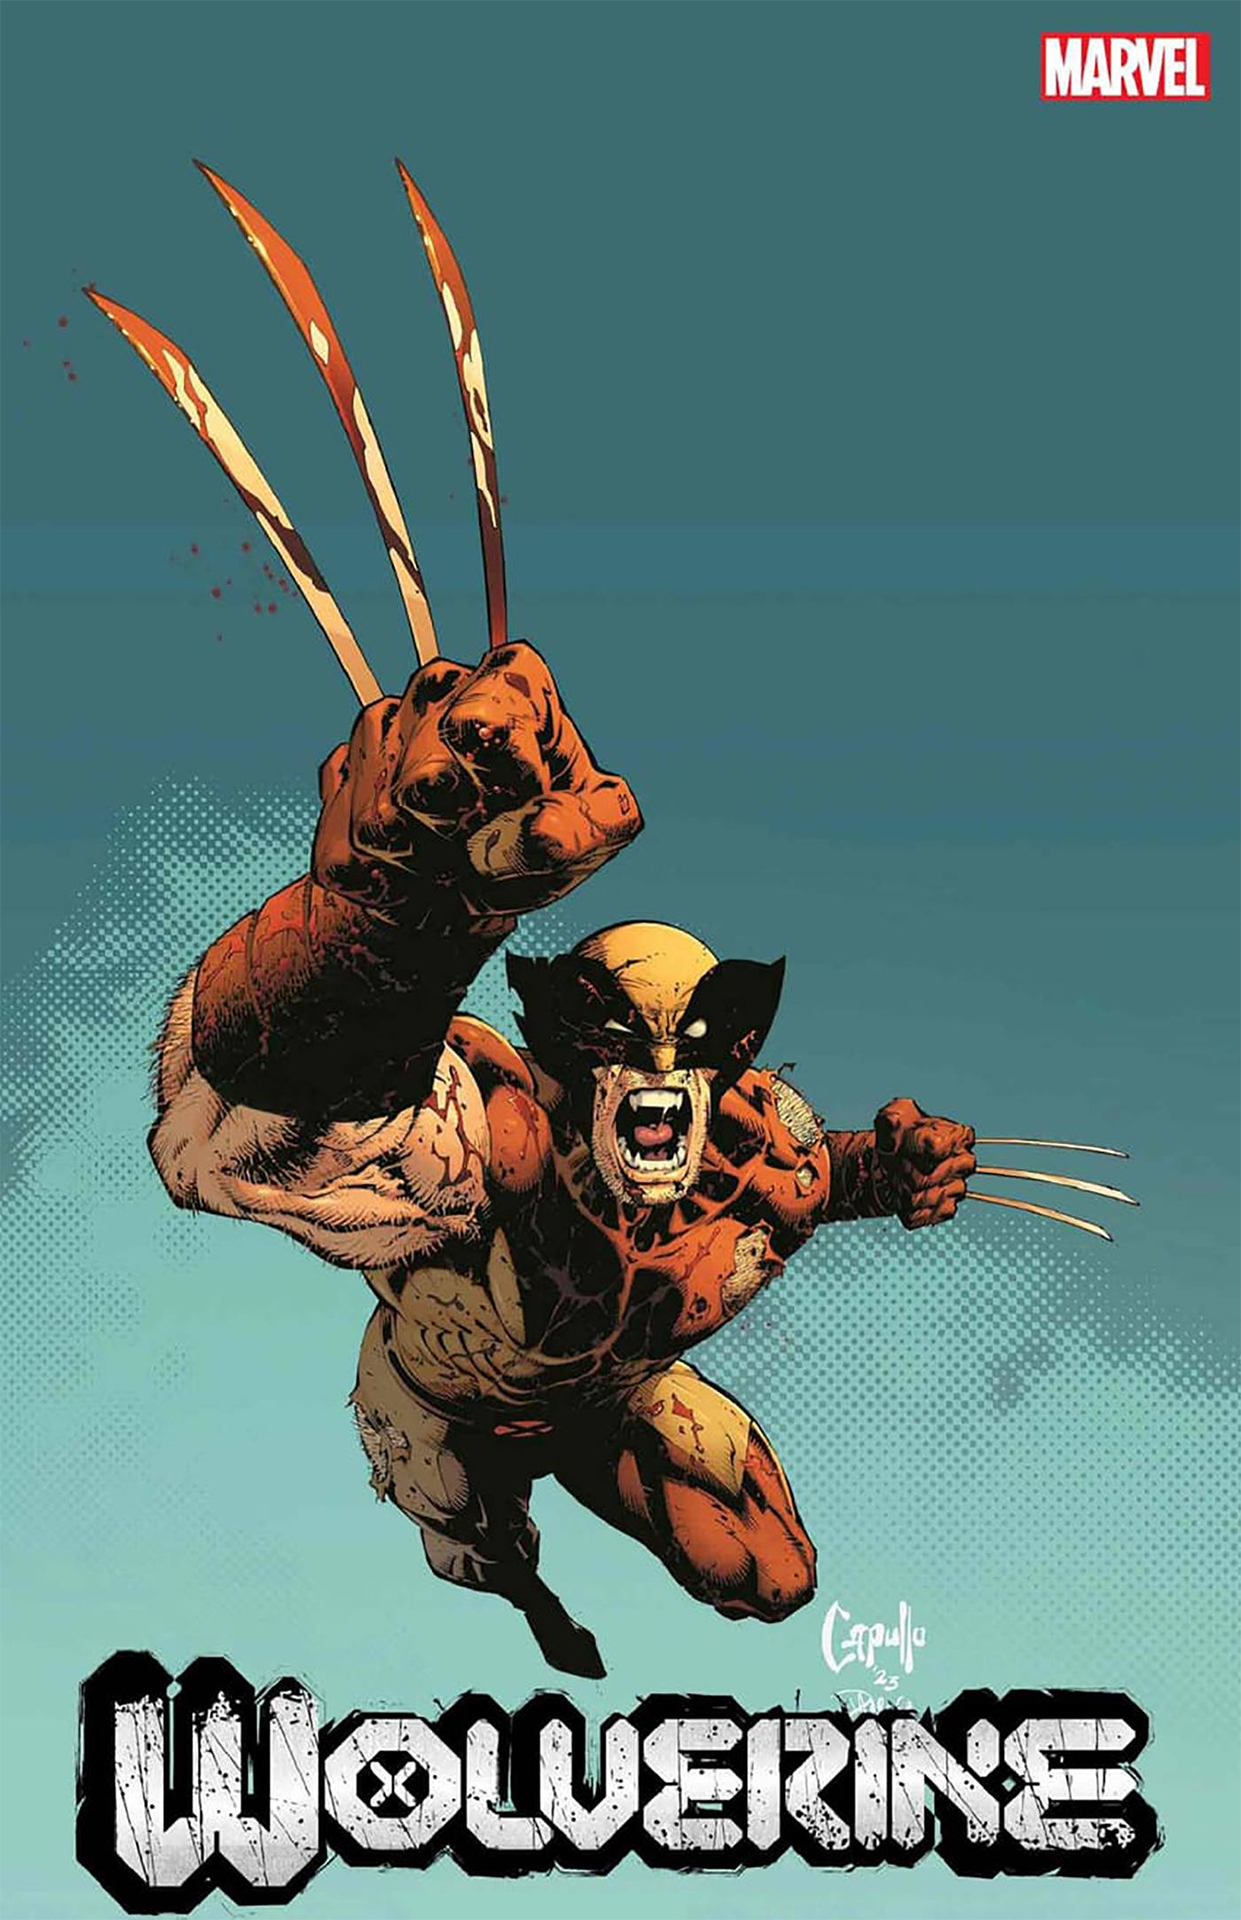 Wolverine #37 Greg Capullo variant cover